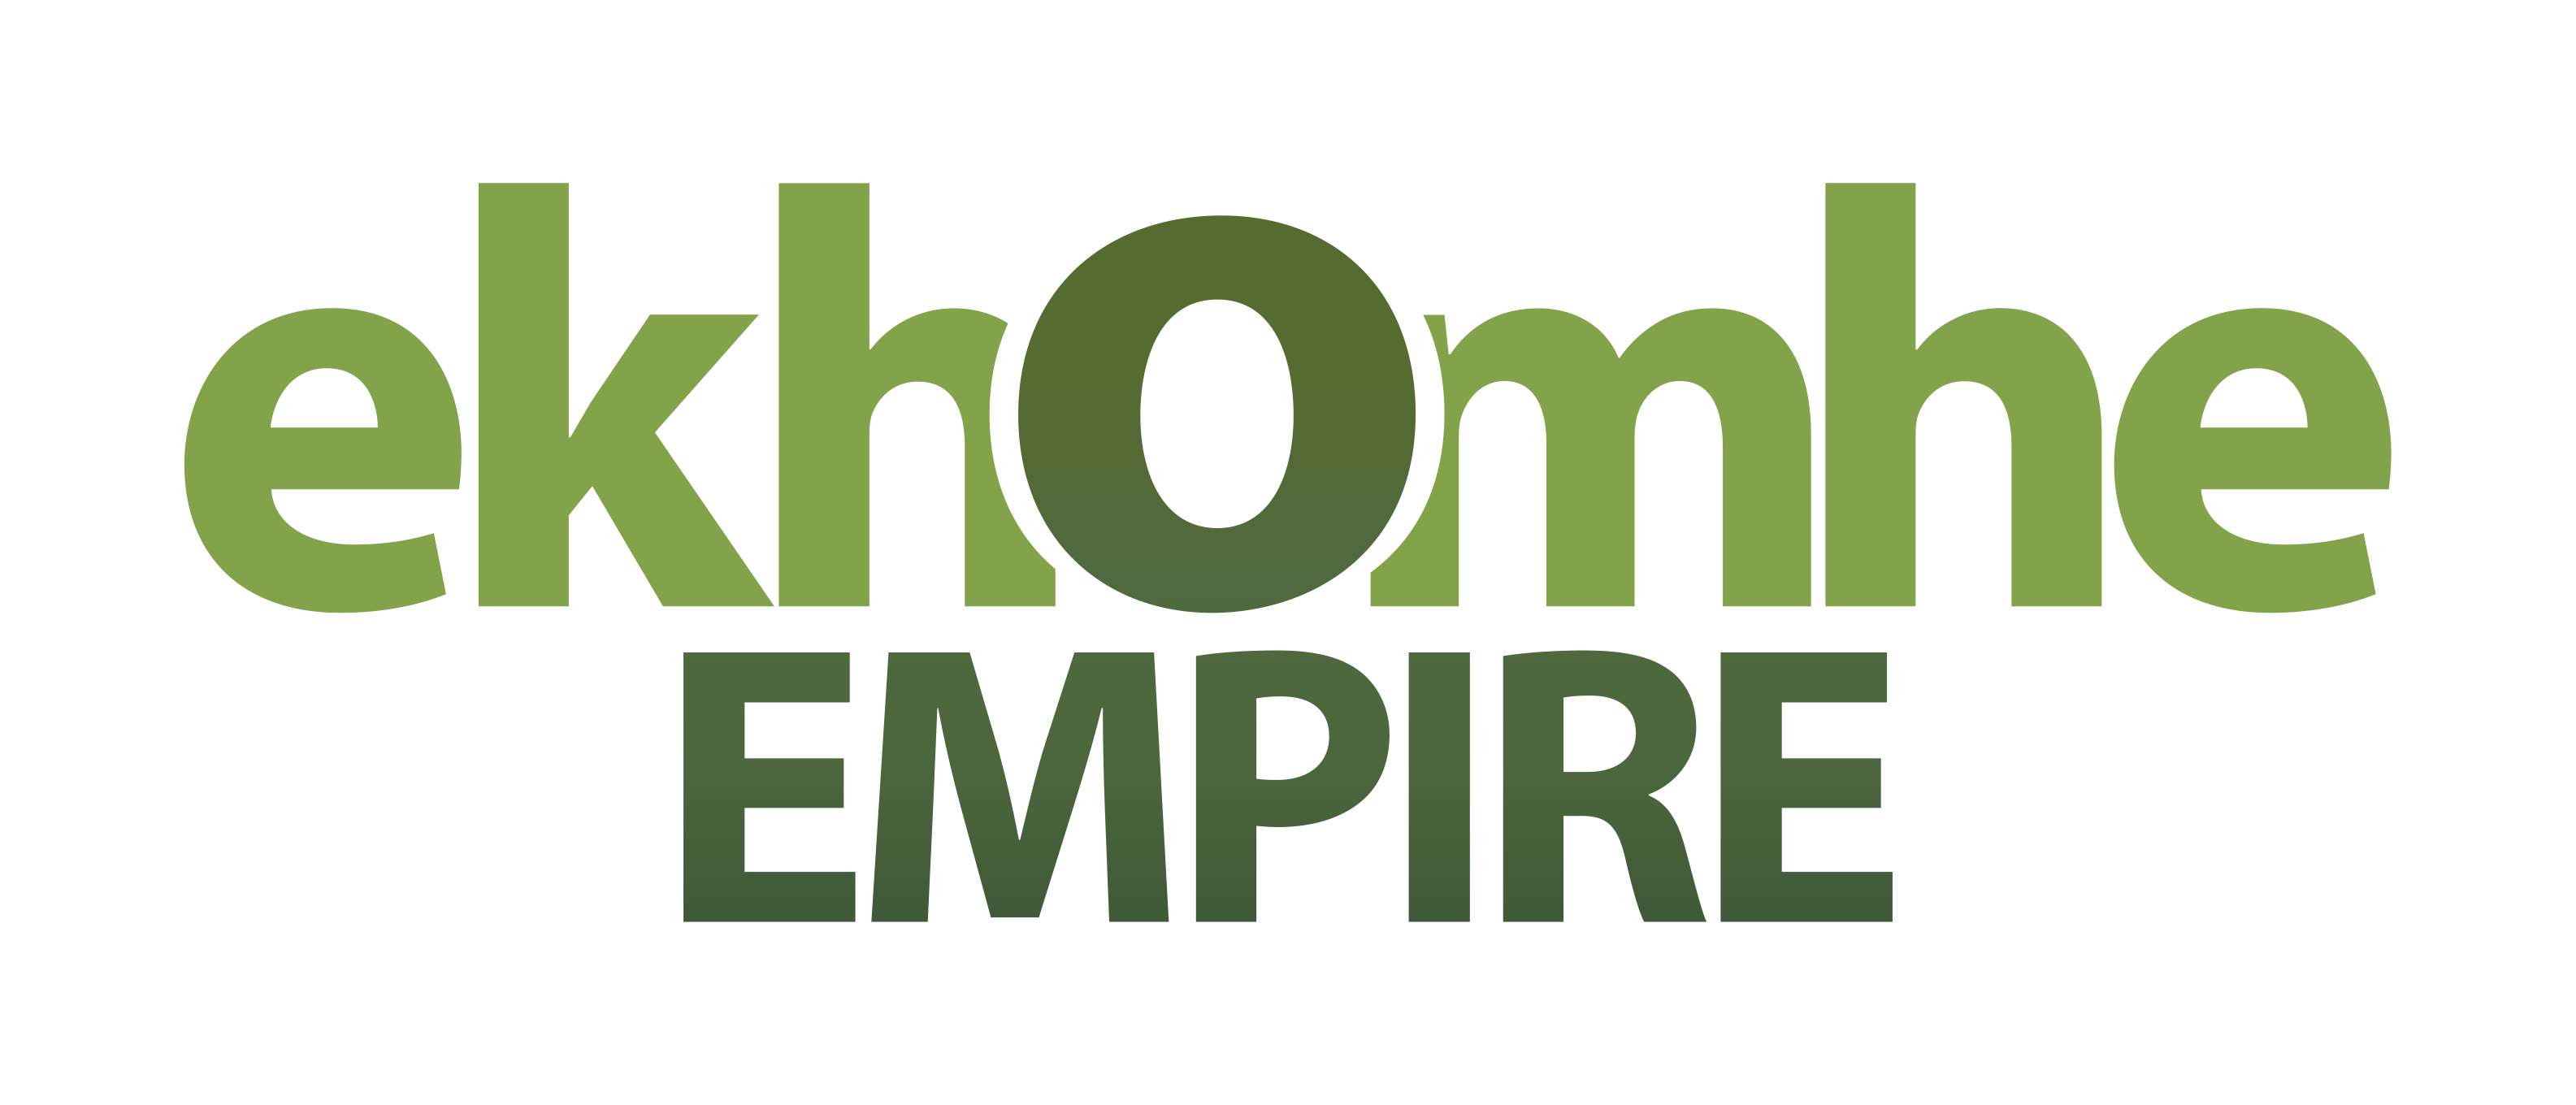 Ekhomhe Empire